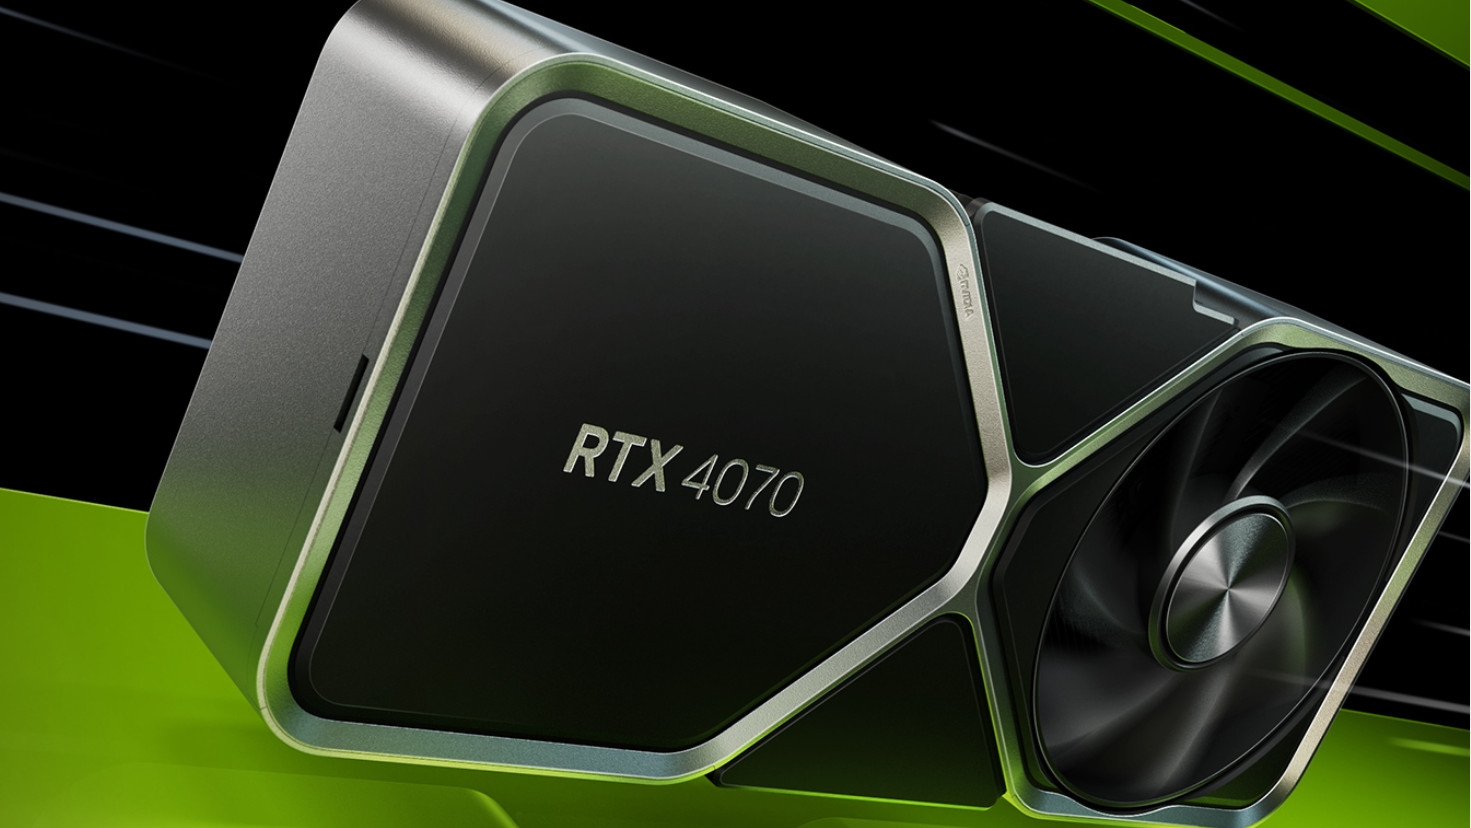 Nvidia GeForce RTX 4080 Super rumor points to VRAM upgrade